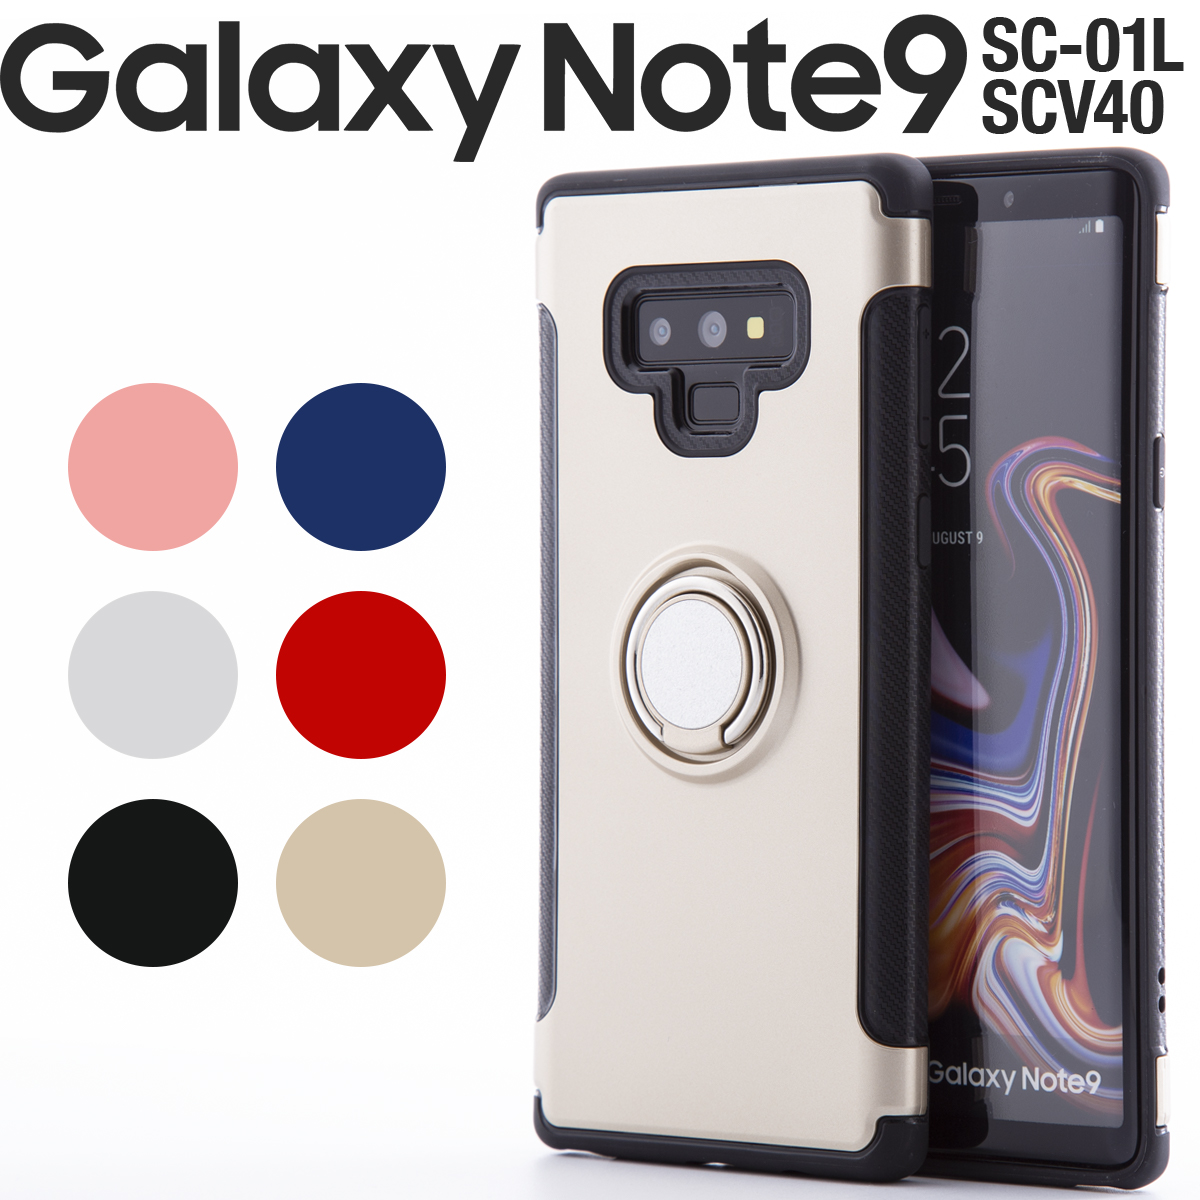 Galaxy Note9 SC-01L SCV40 リング付き耐衝撃ケース|スマホケース卸問屋